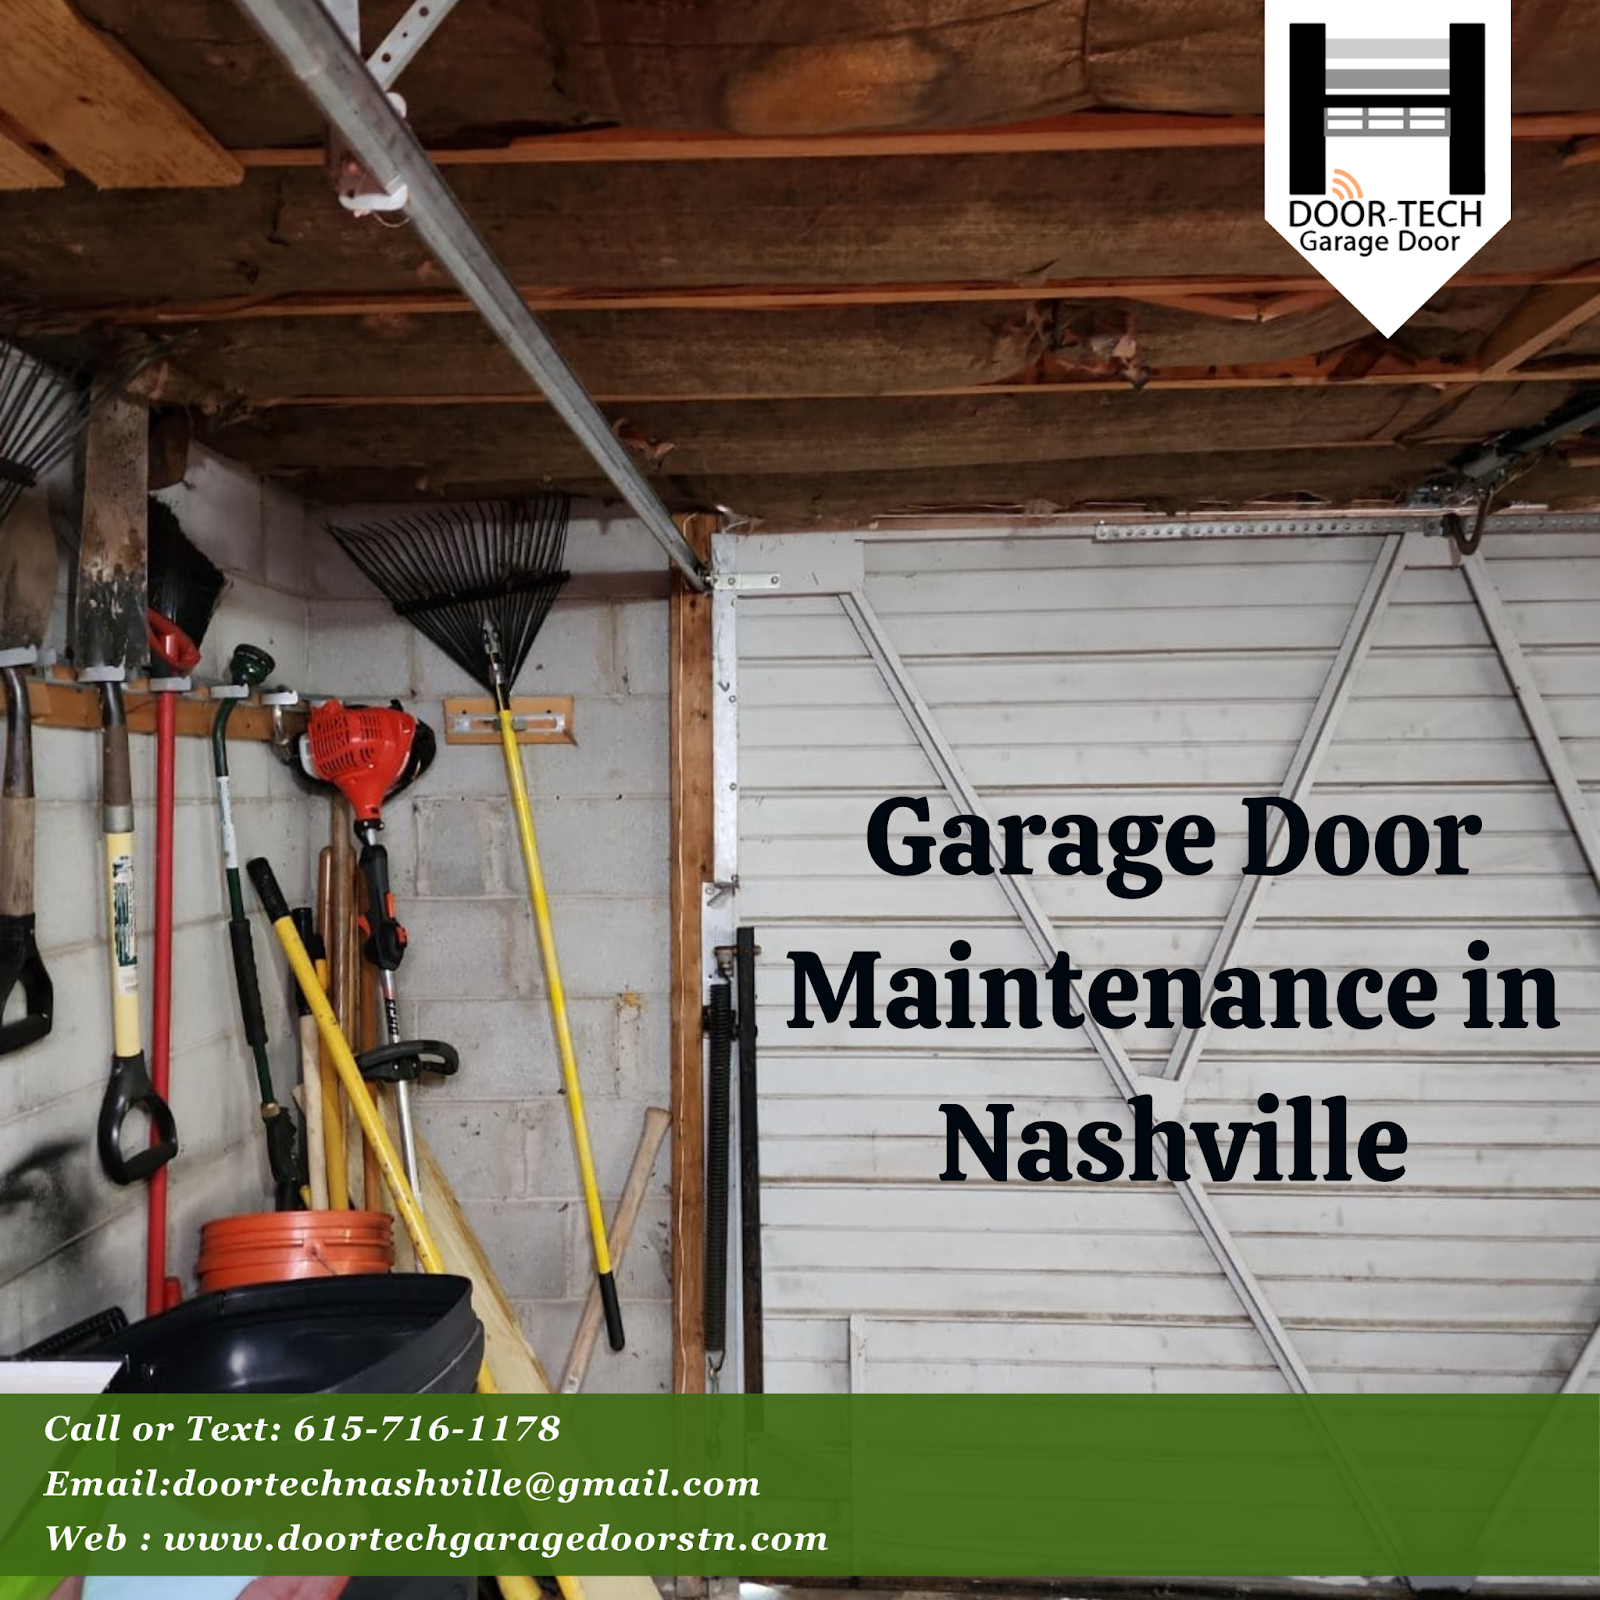 Garage Doors' Maintenance services in Nashville